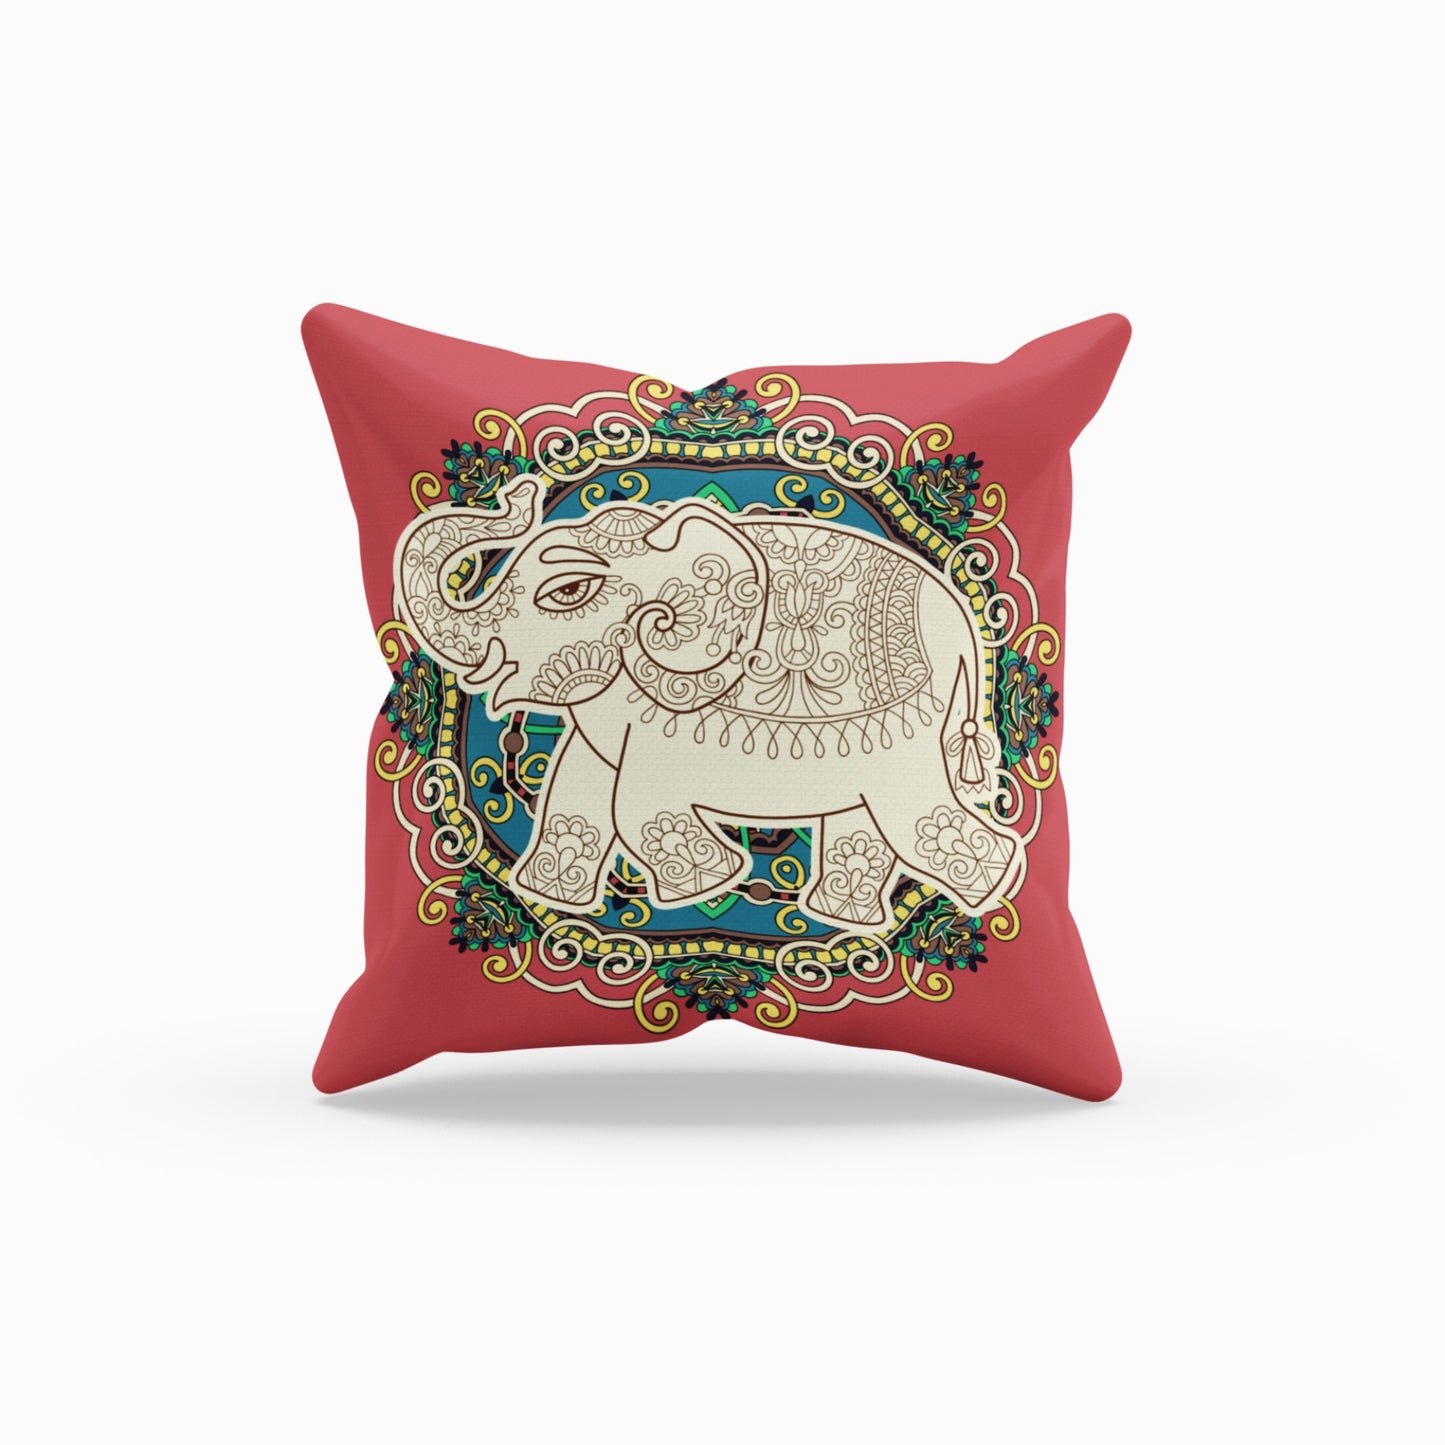 Homeezone's Feng Shui Elephant Theme Pillow